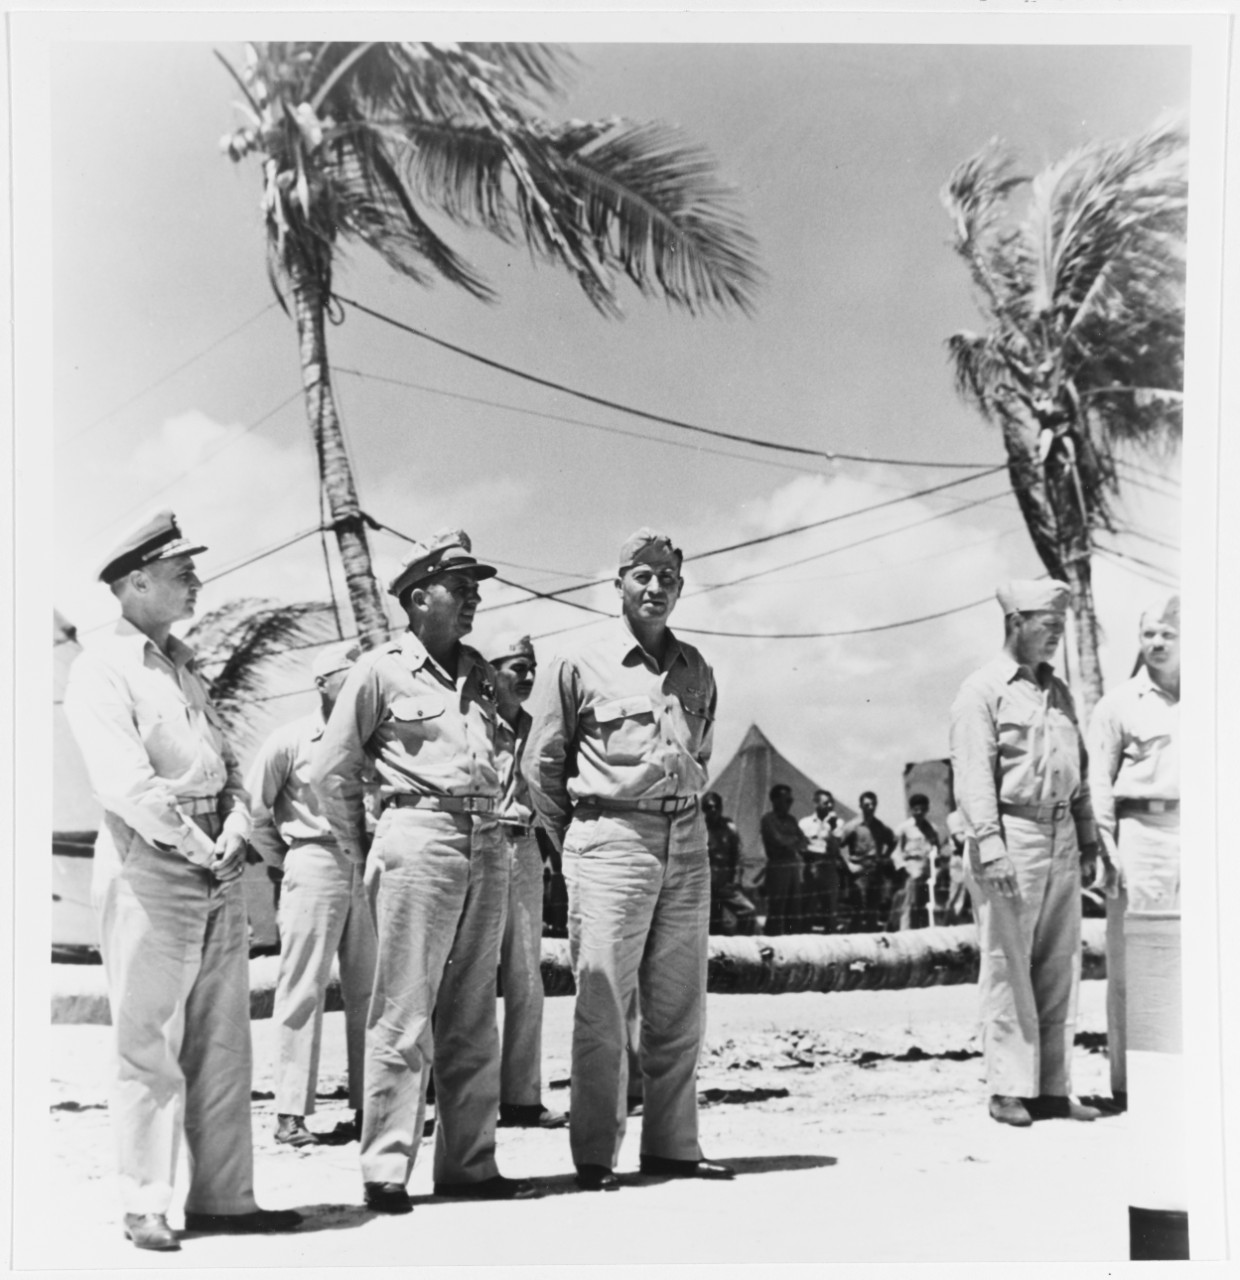 Naval air base, Eniwetok, Awards ceremony, 4 June 1944.